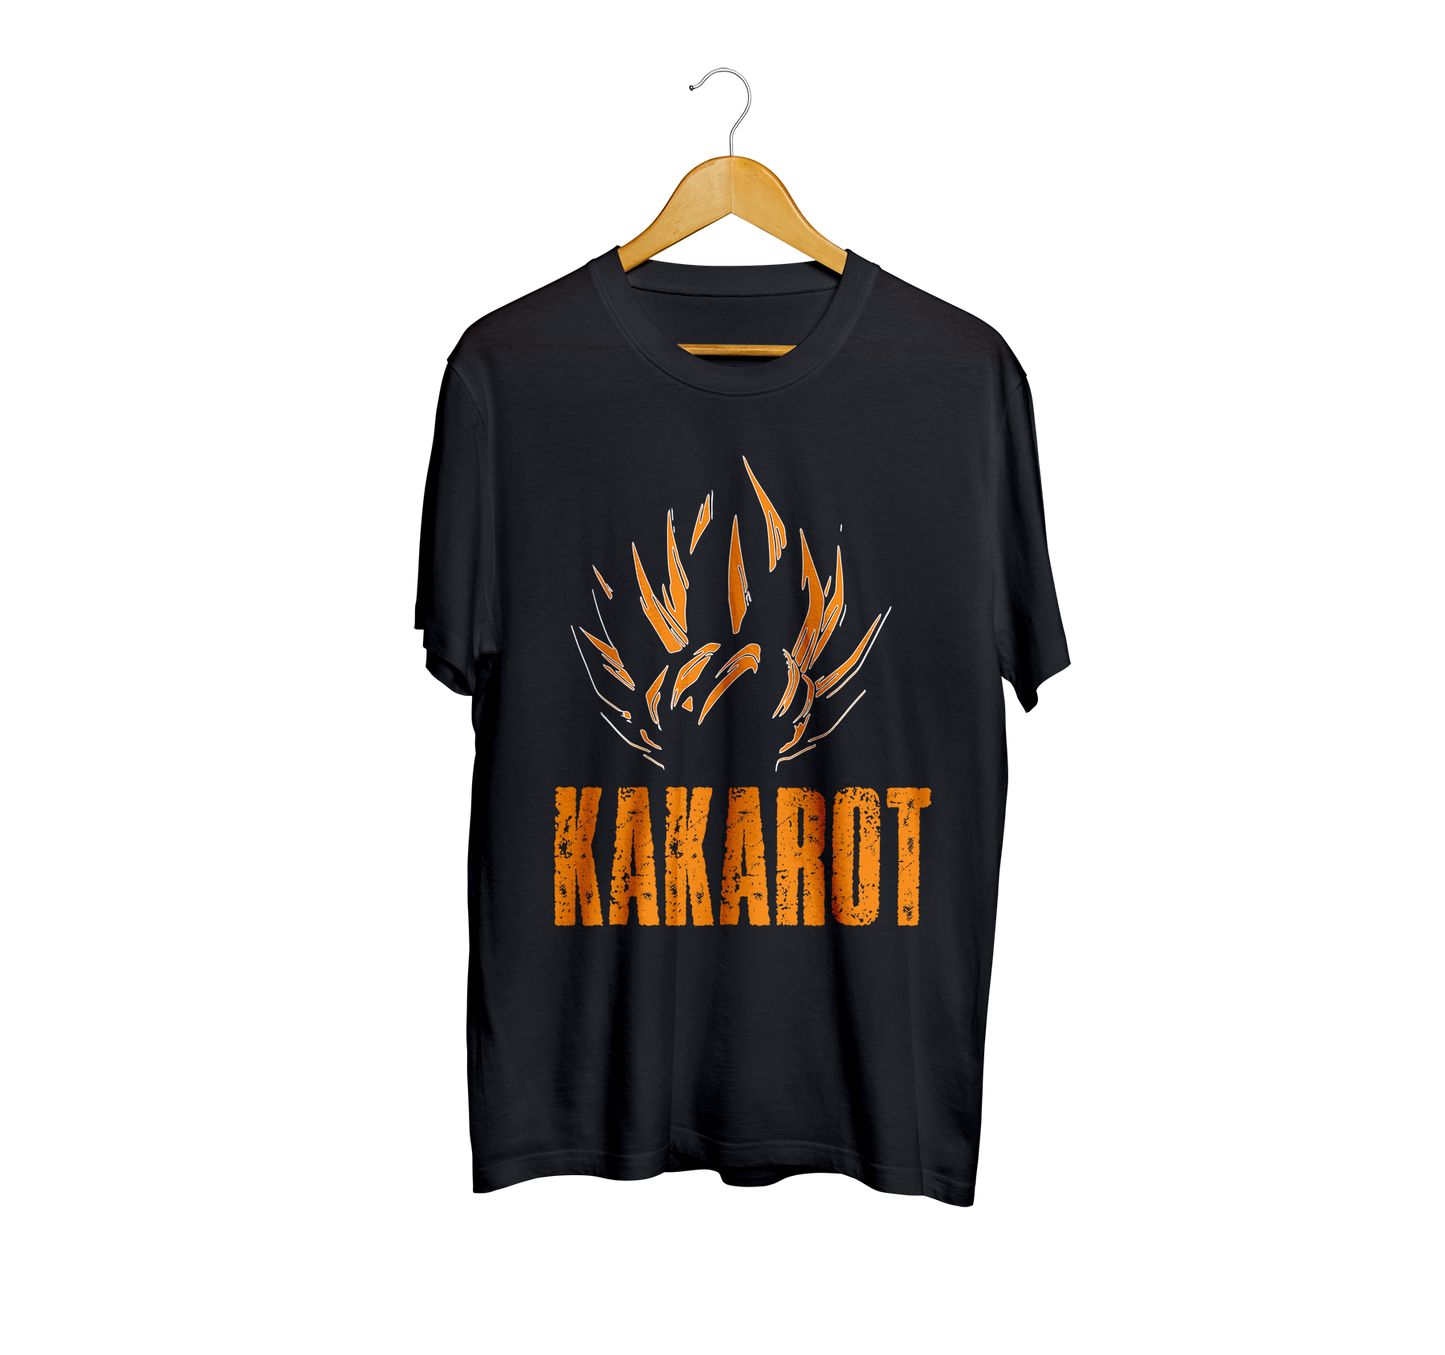 Kakarot Regular Fit Anime T-shirt but drafted